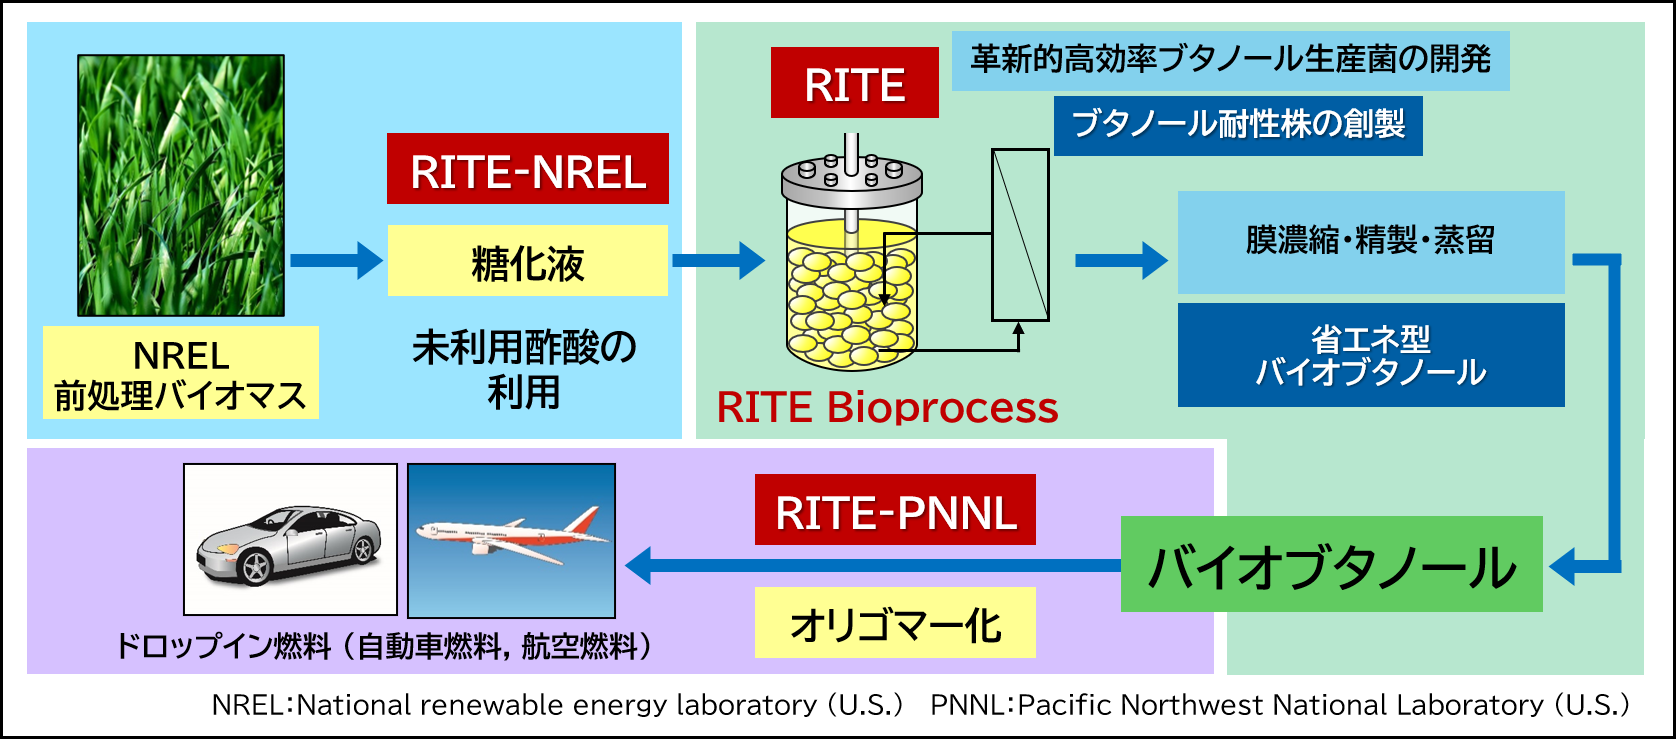 「RITE Bioprocess」によるバイオブタノールおよびジェット燃料生産